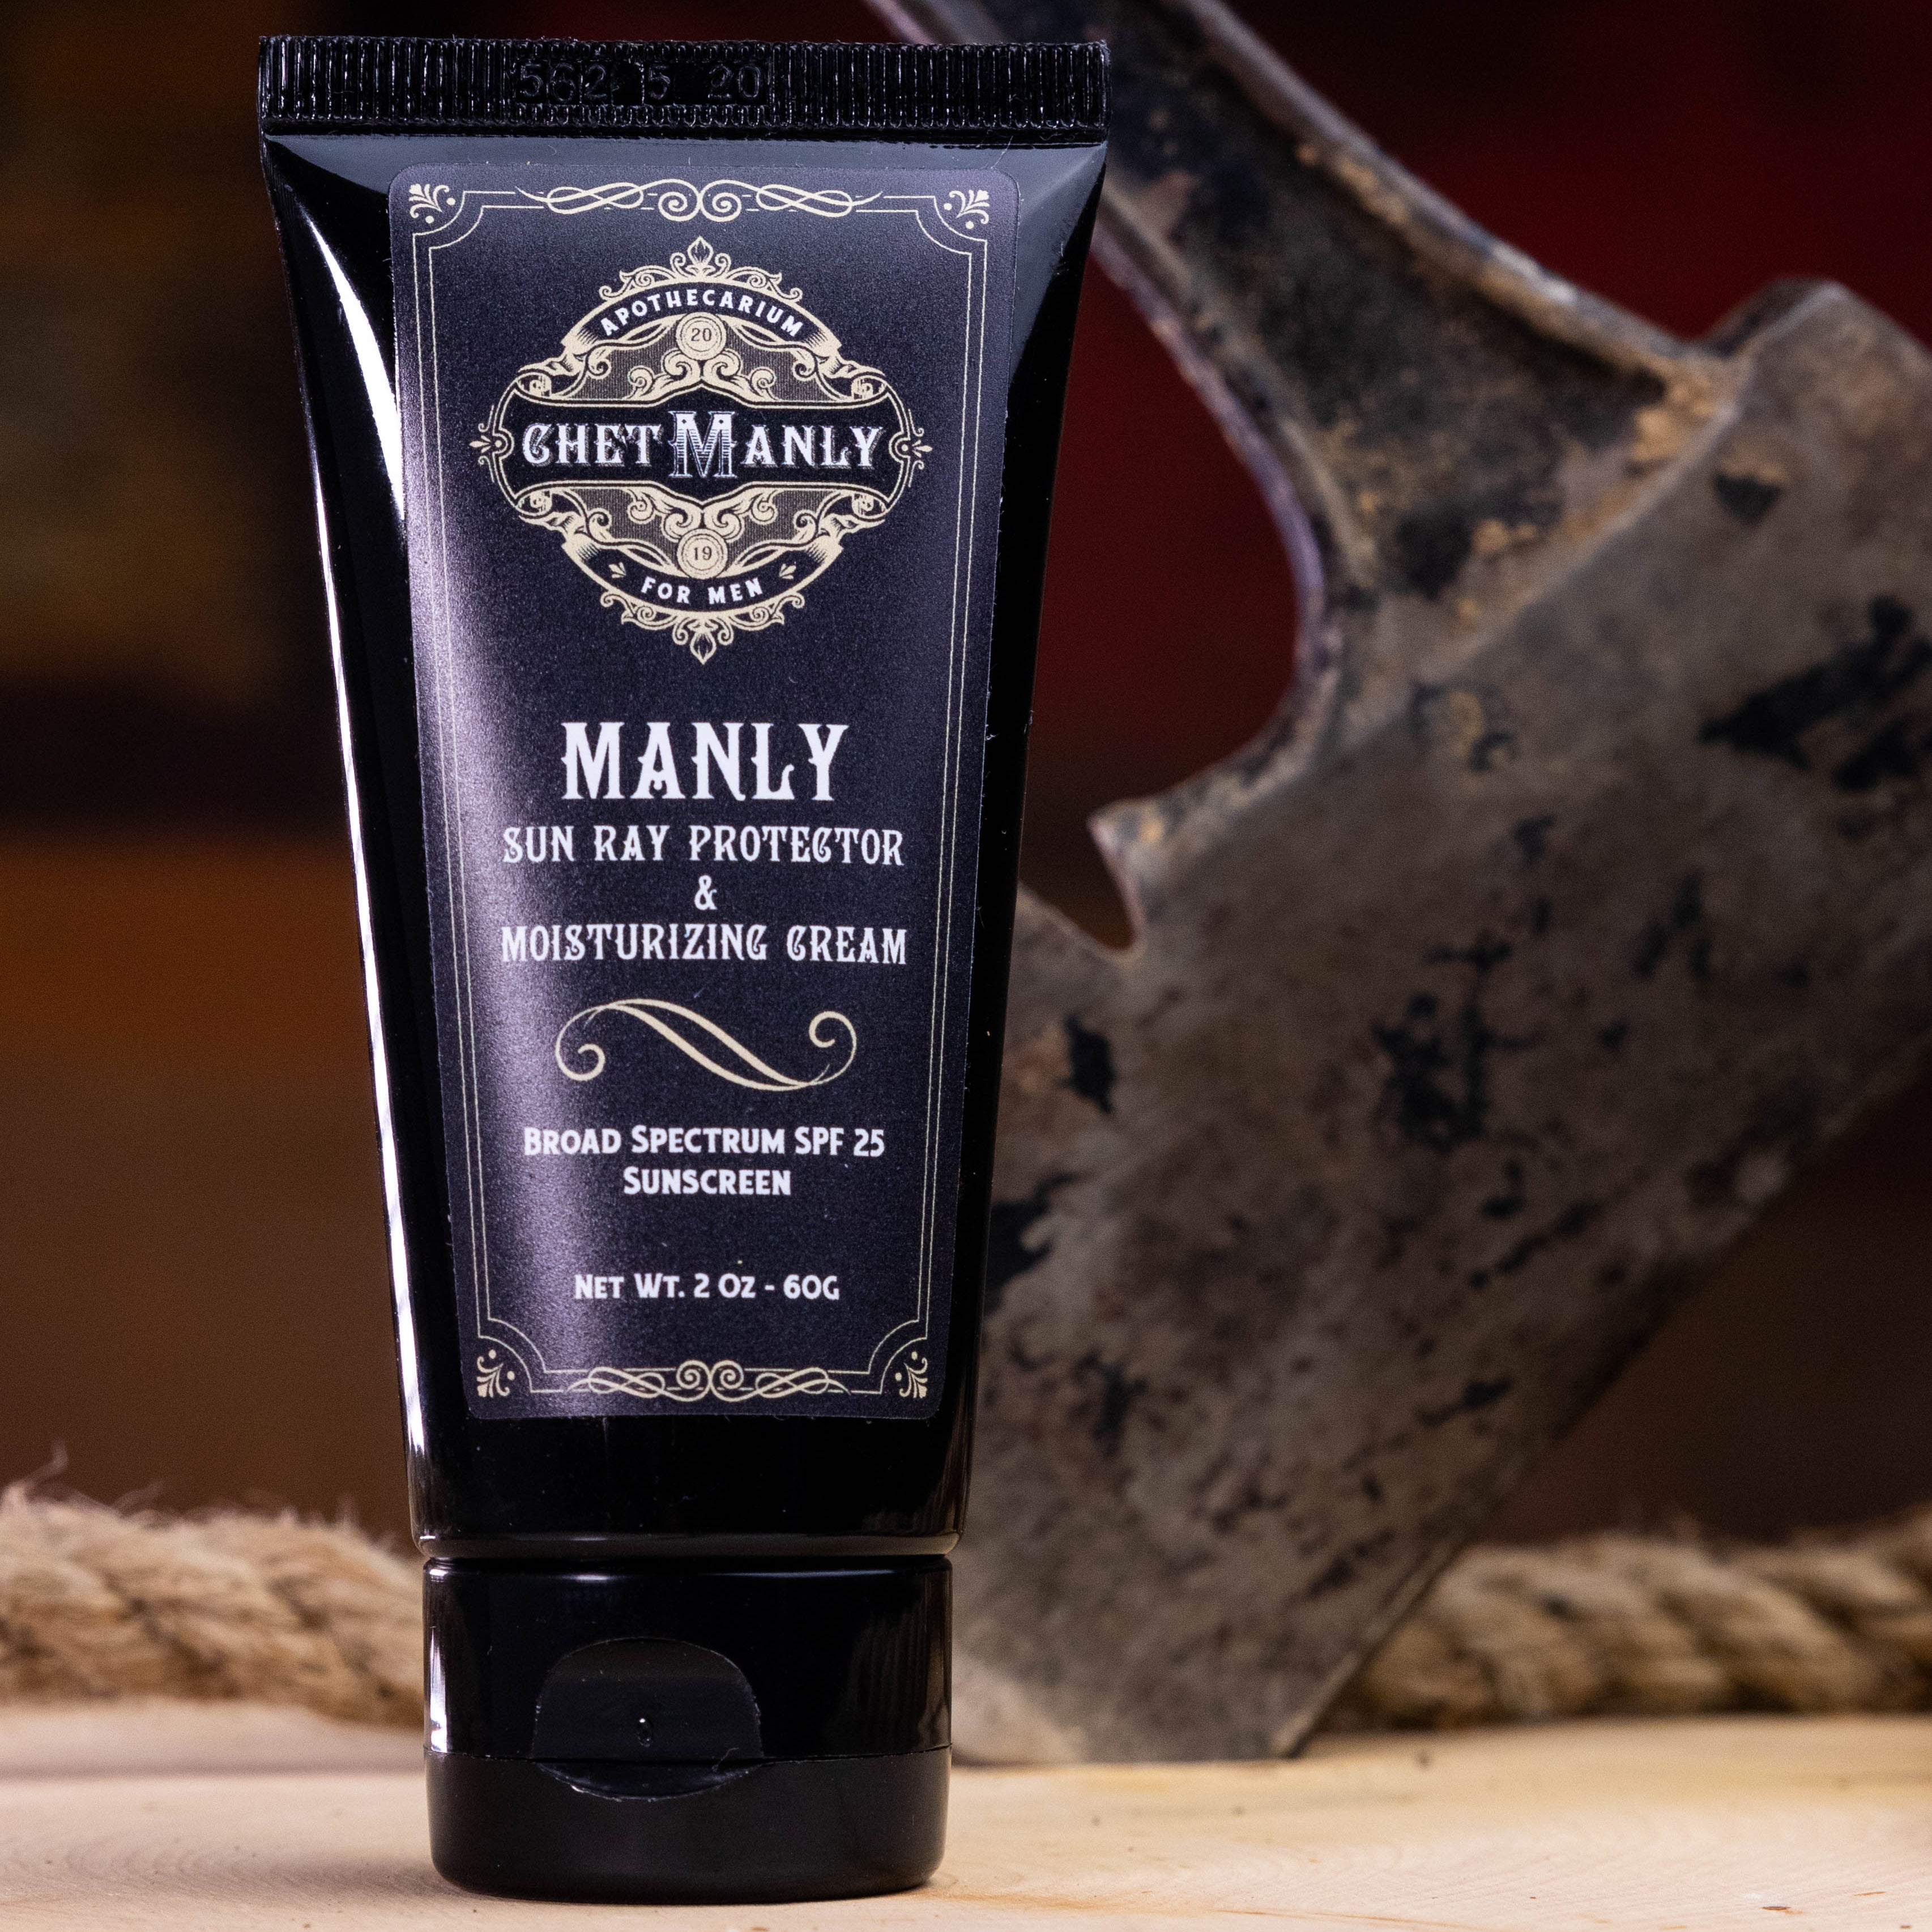 Manly Sun Ray Protector & Moisturizing Cream